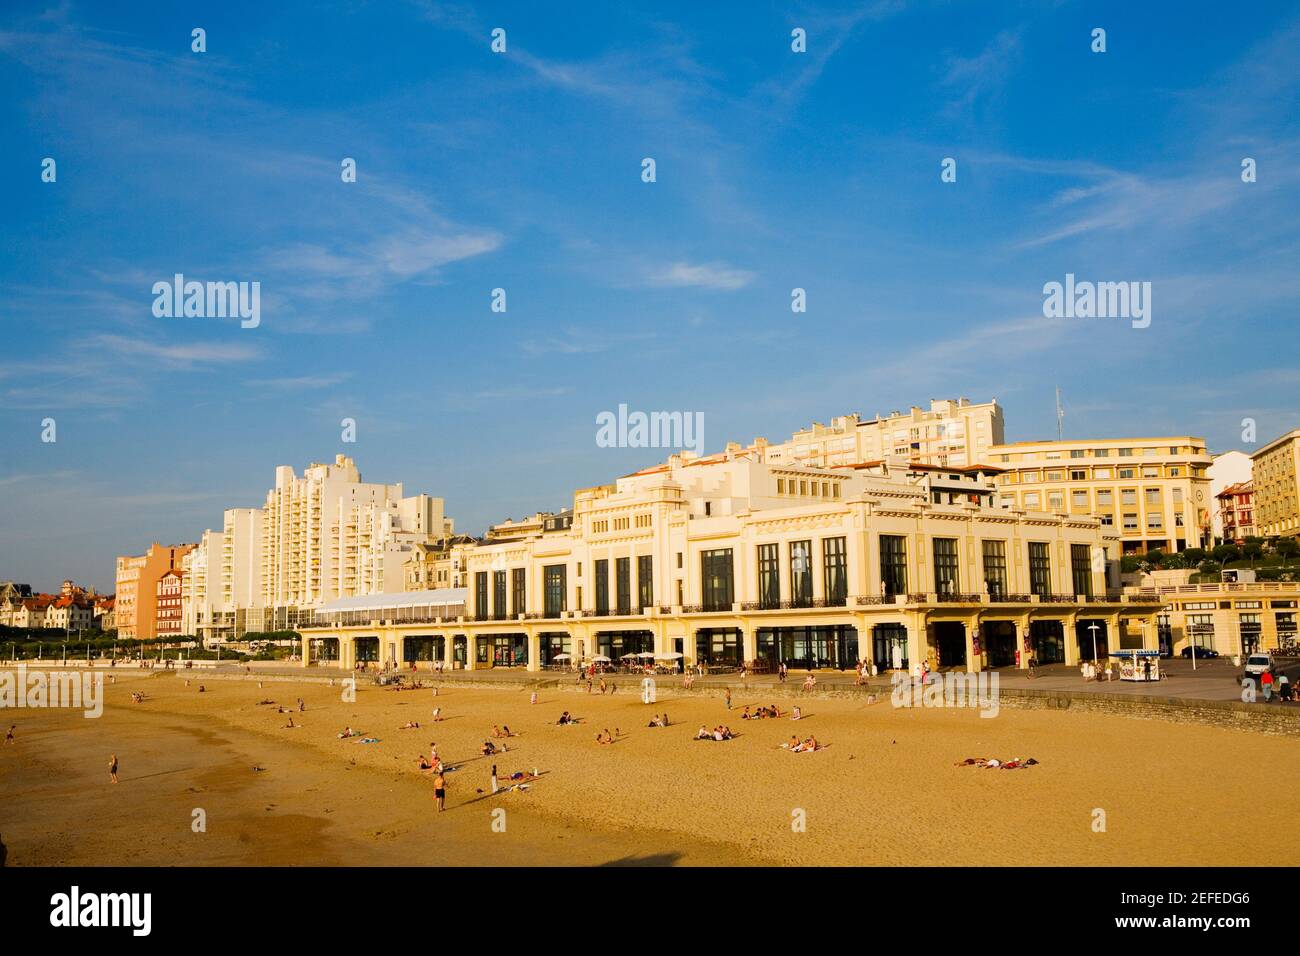 Tourists on the beach, Casino Municipal, Grande Plage, Biarritz, France Stock Photo